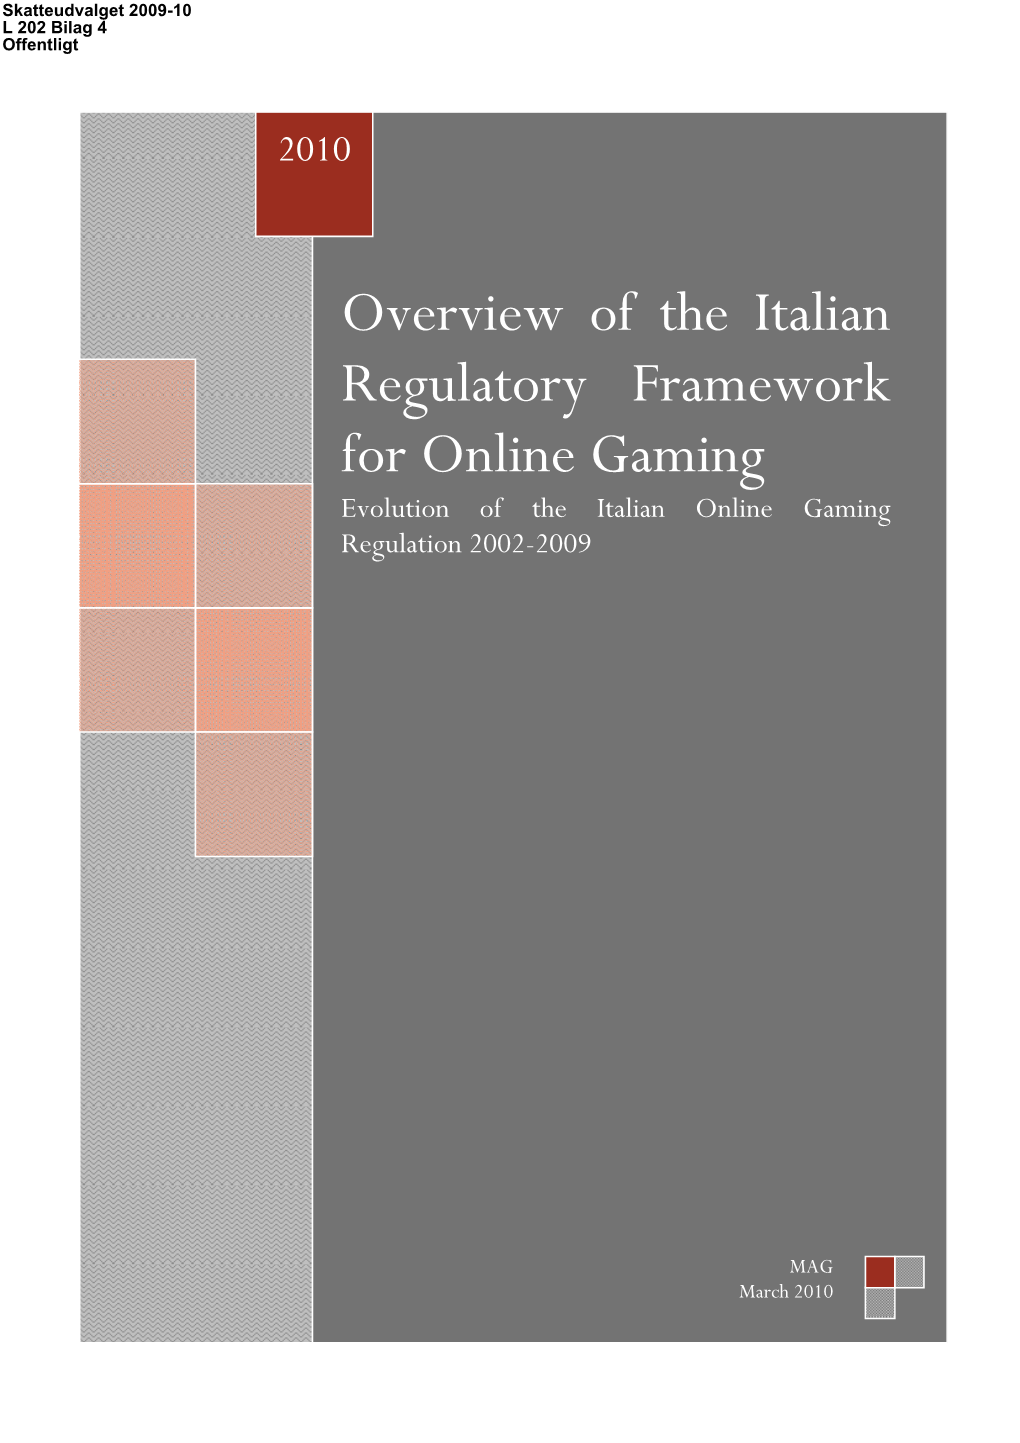 Overview of the Italian Regulatory Framework for Online Gaming